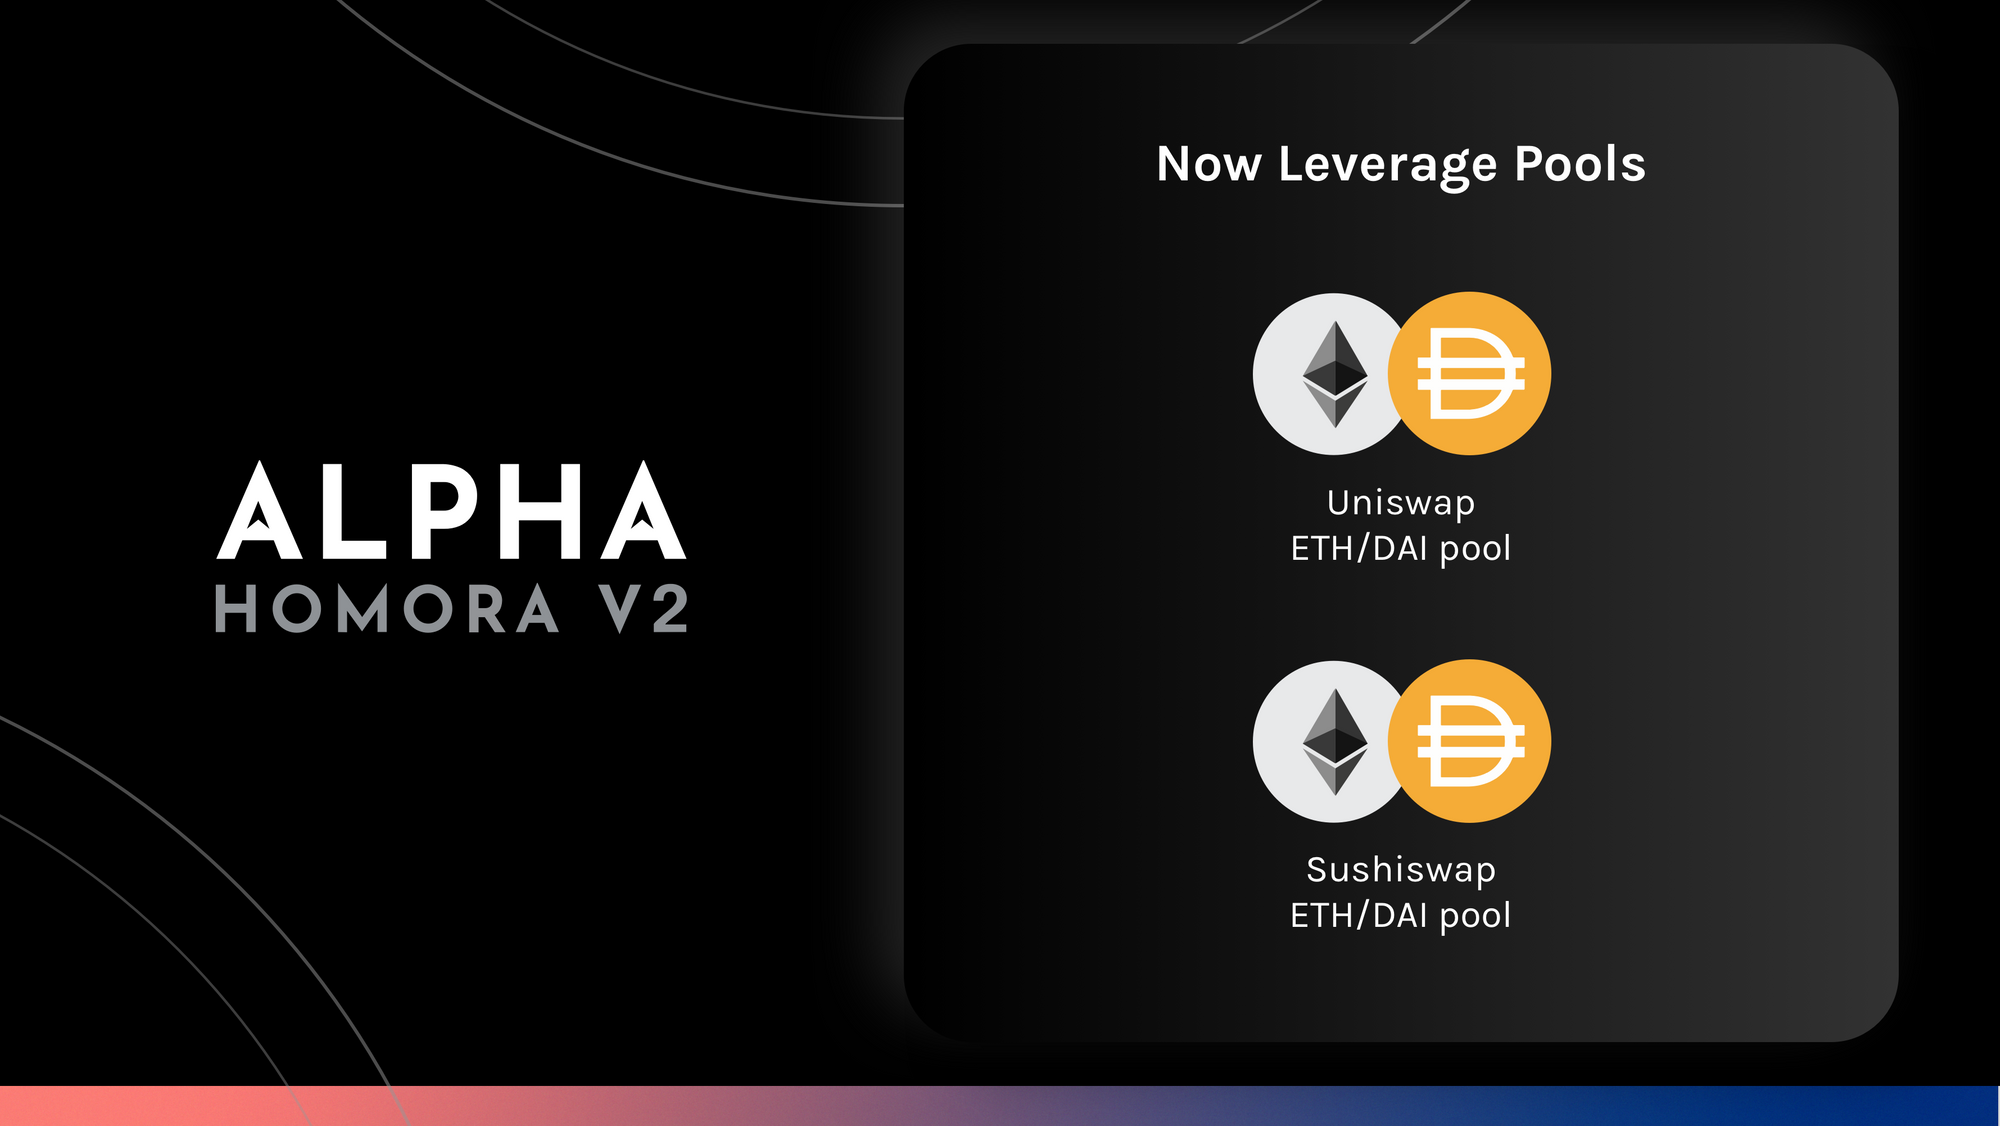 Alpha Homora V2 Adds Leveraged ETH/DAI Pools on Uniswap & Sushiswap